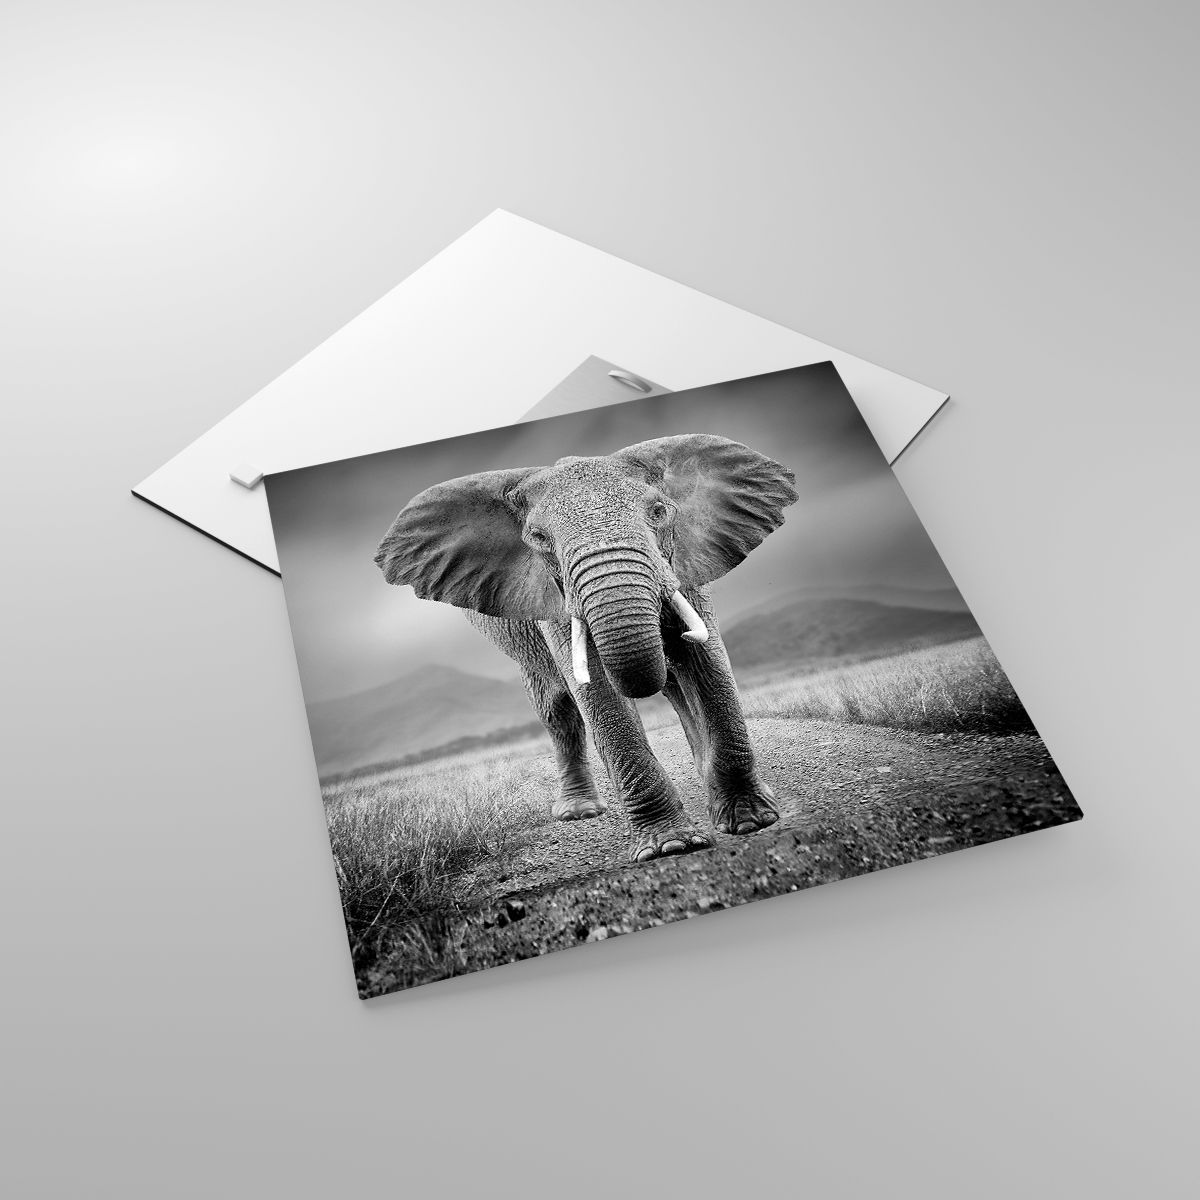 Glasbild Elefant, Glasbild Tiere, Glasbild Landschaft, Glasbild Natur, Glasbild Afrika